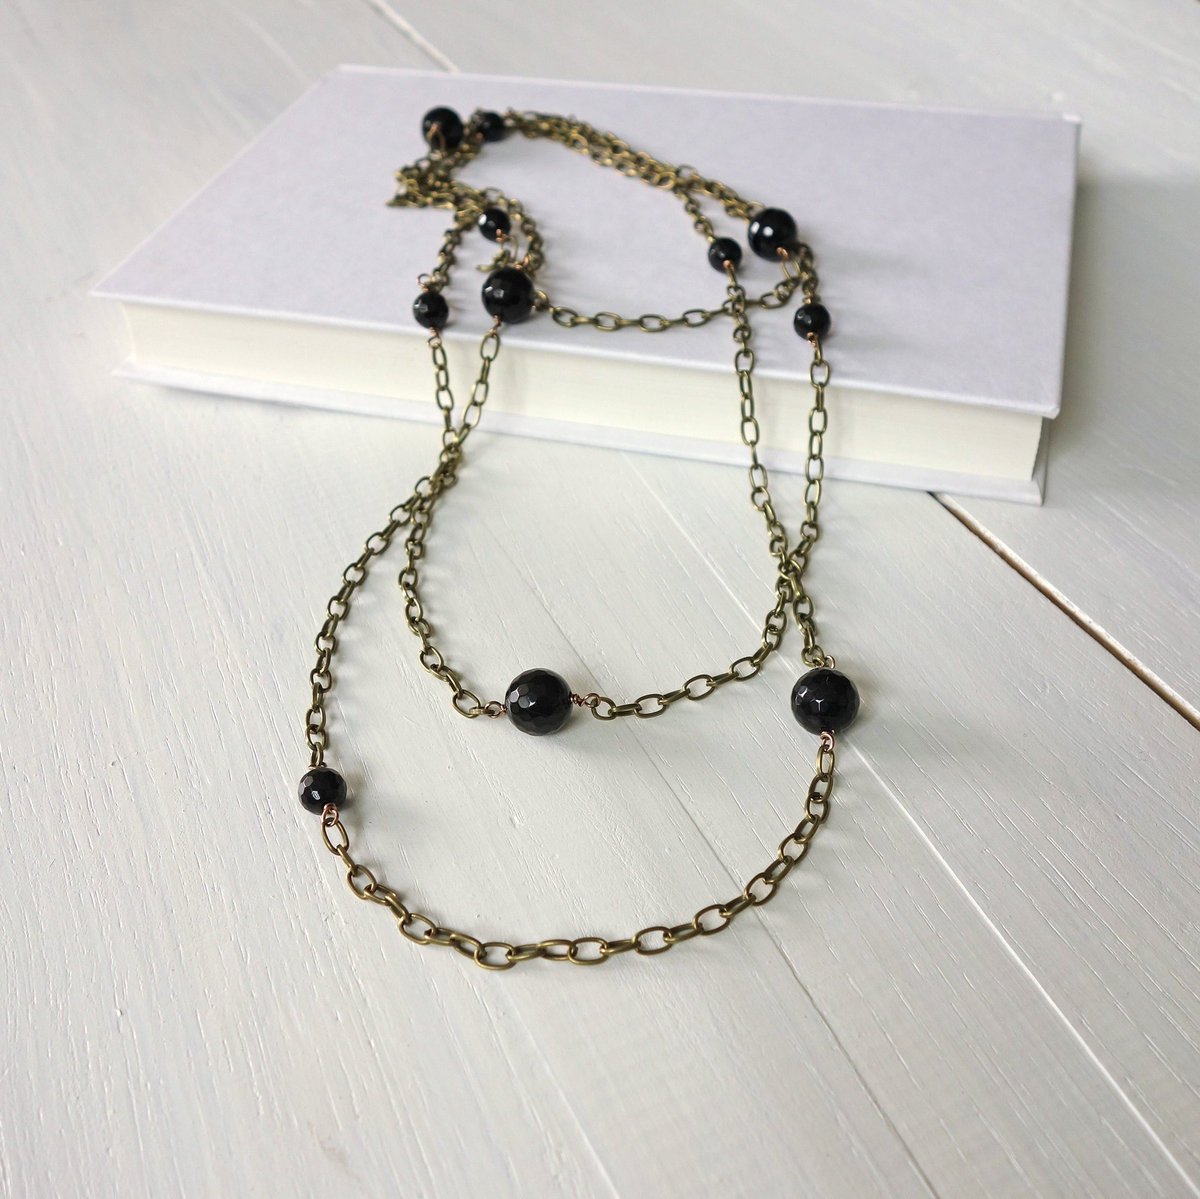 Long Wrap Necklace Black Onyx Stones Vintage Style Chain. 
#elegant #jewelry #etsy #giftforher #shopsmall #etsygifts
etsy.com/listing/125055… @Etsy